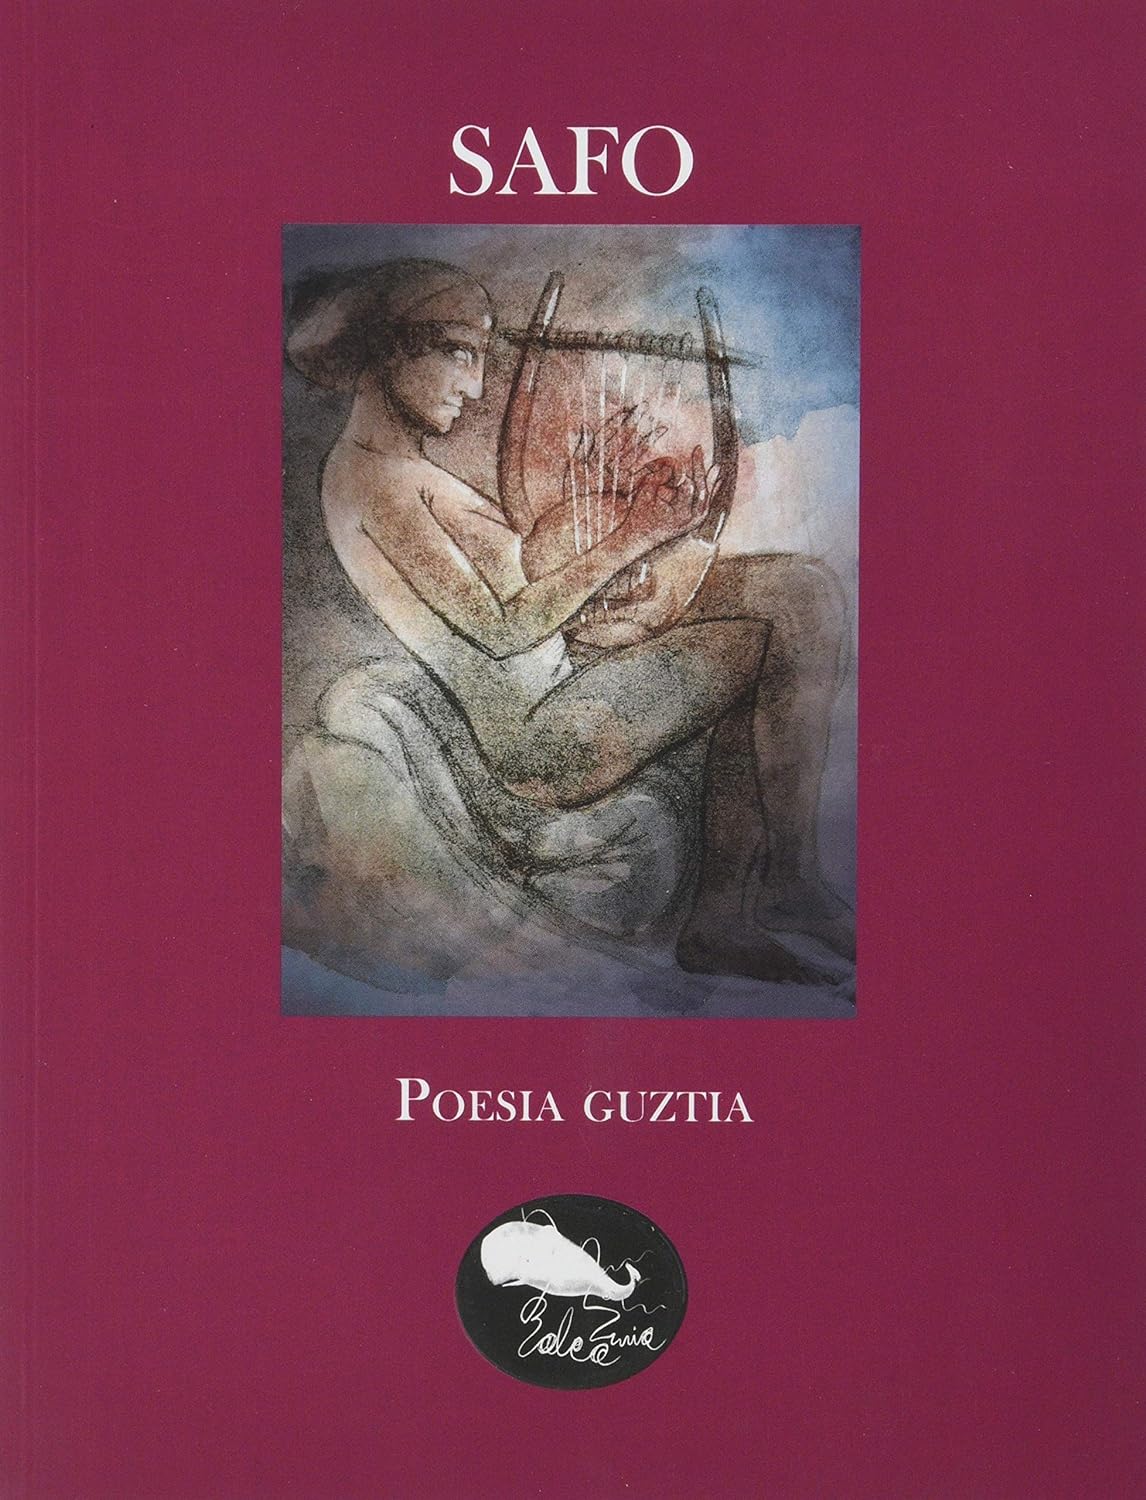 Safo (Paperback, Euskara language, 2020, Balea zuria)